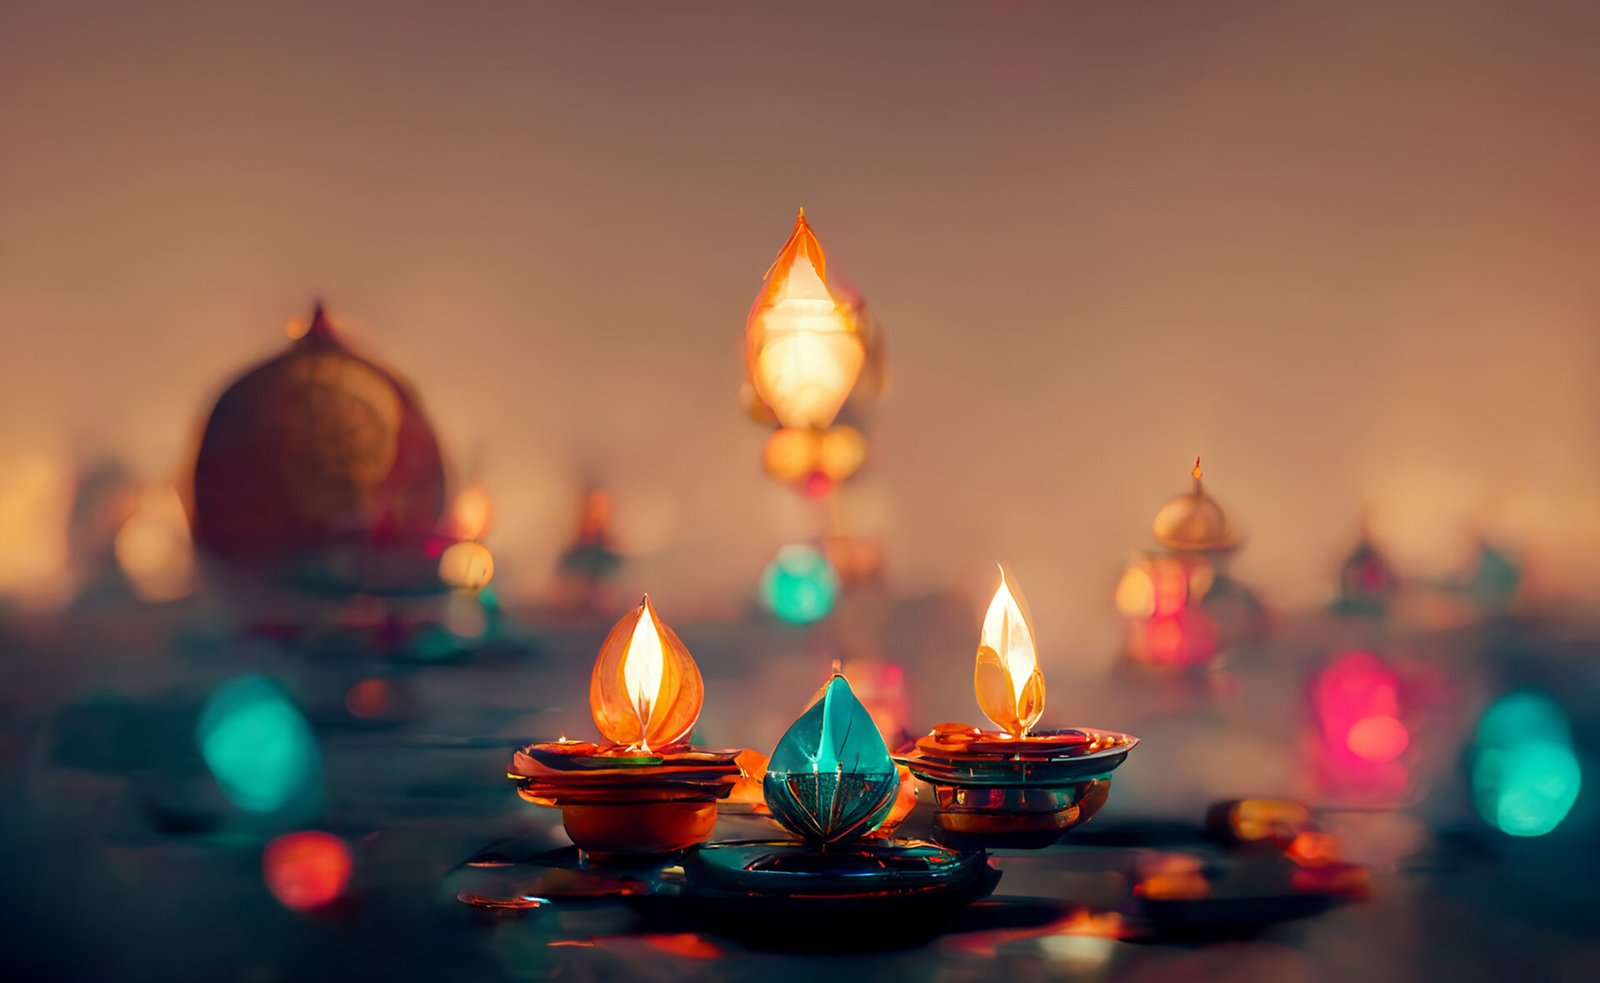 happy-diwali-festival-lights-holiday-background-illustration-design-digital-art-style